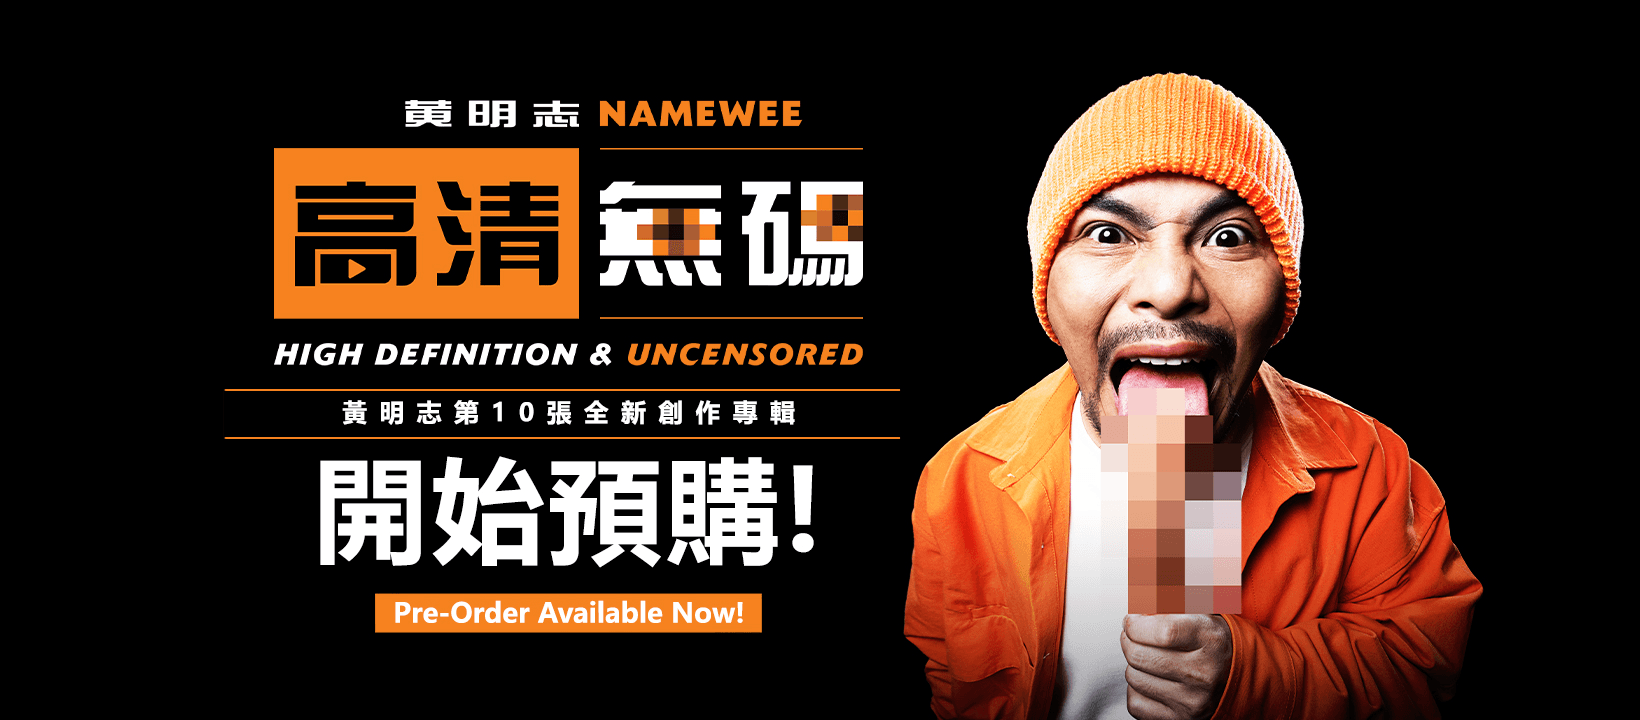 NAMEWEE4896 banner